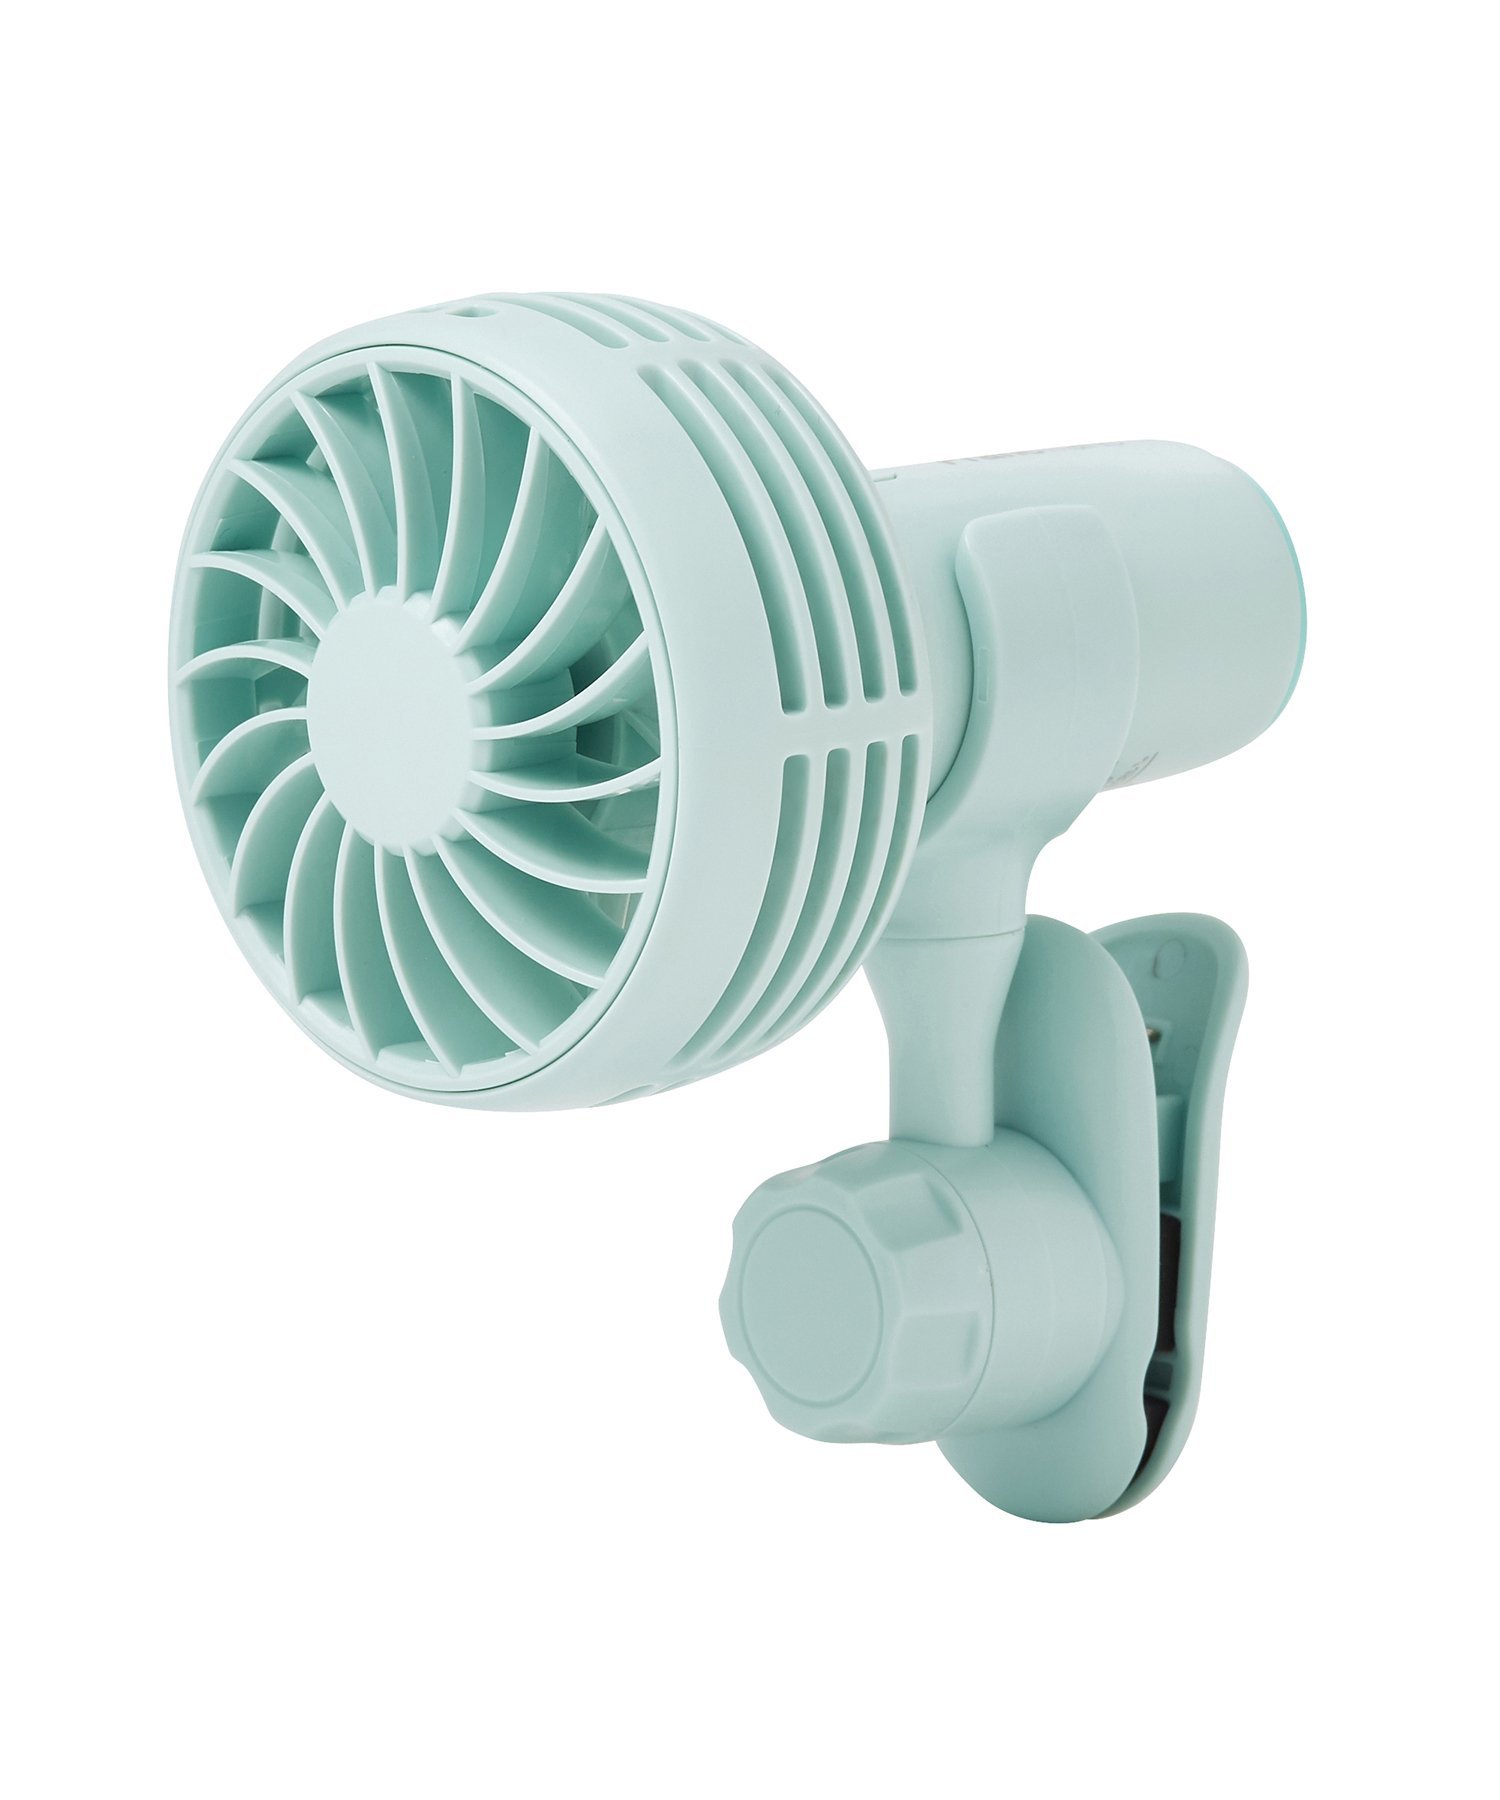 Francfranc フレ ミニファン(扇風機) フランフラン インテリア 生活雑貨 扇風機 空気清浄機 加湿器 グリーン ホワイト